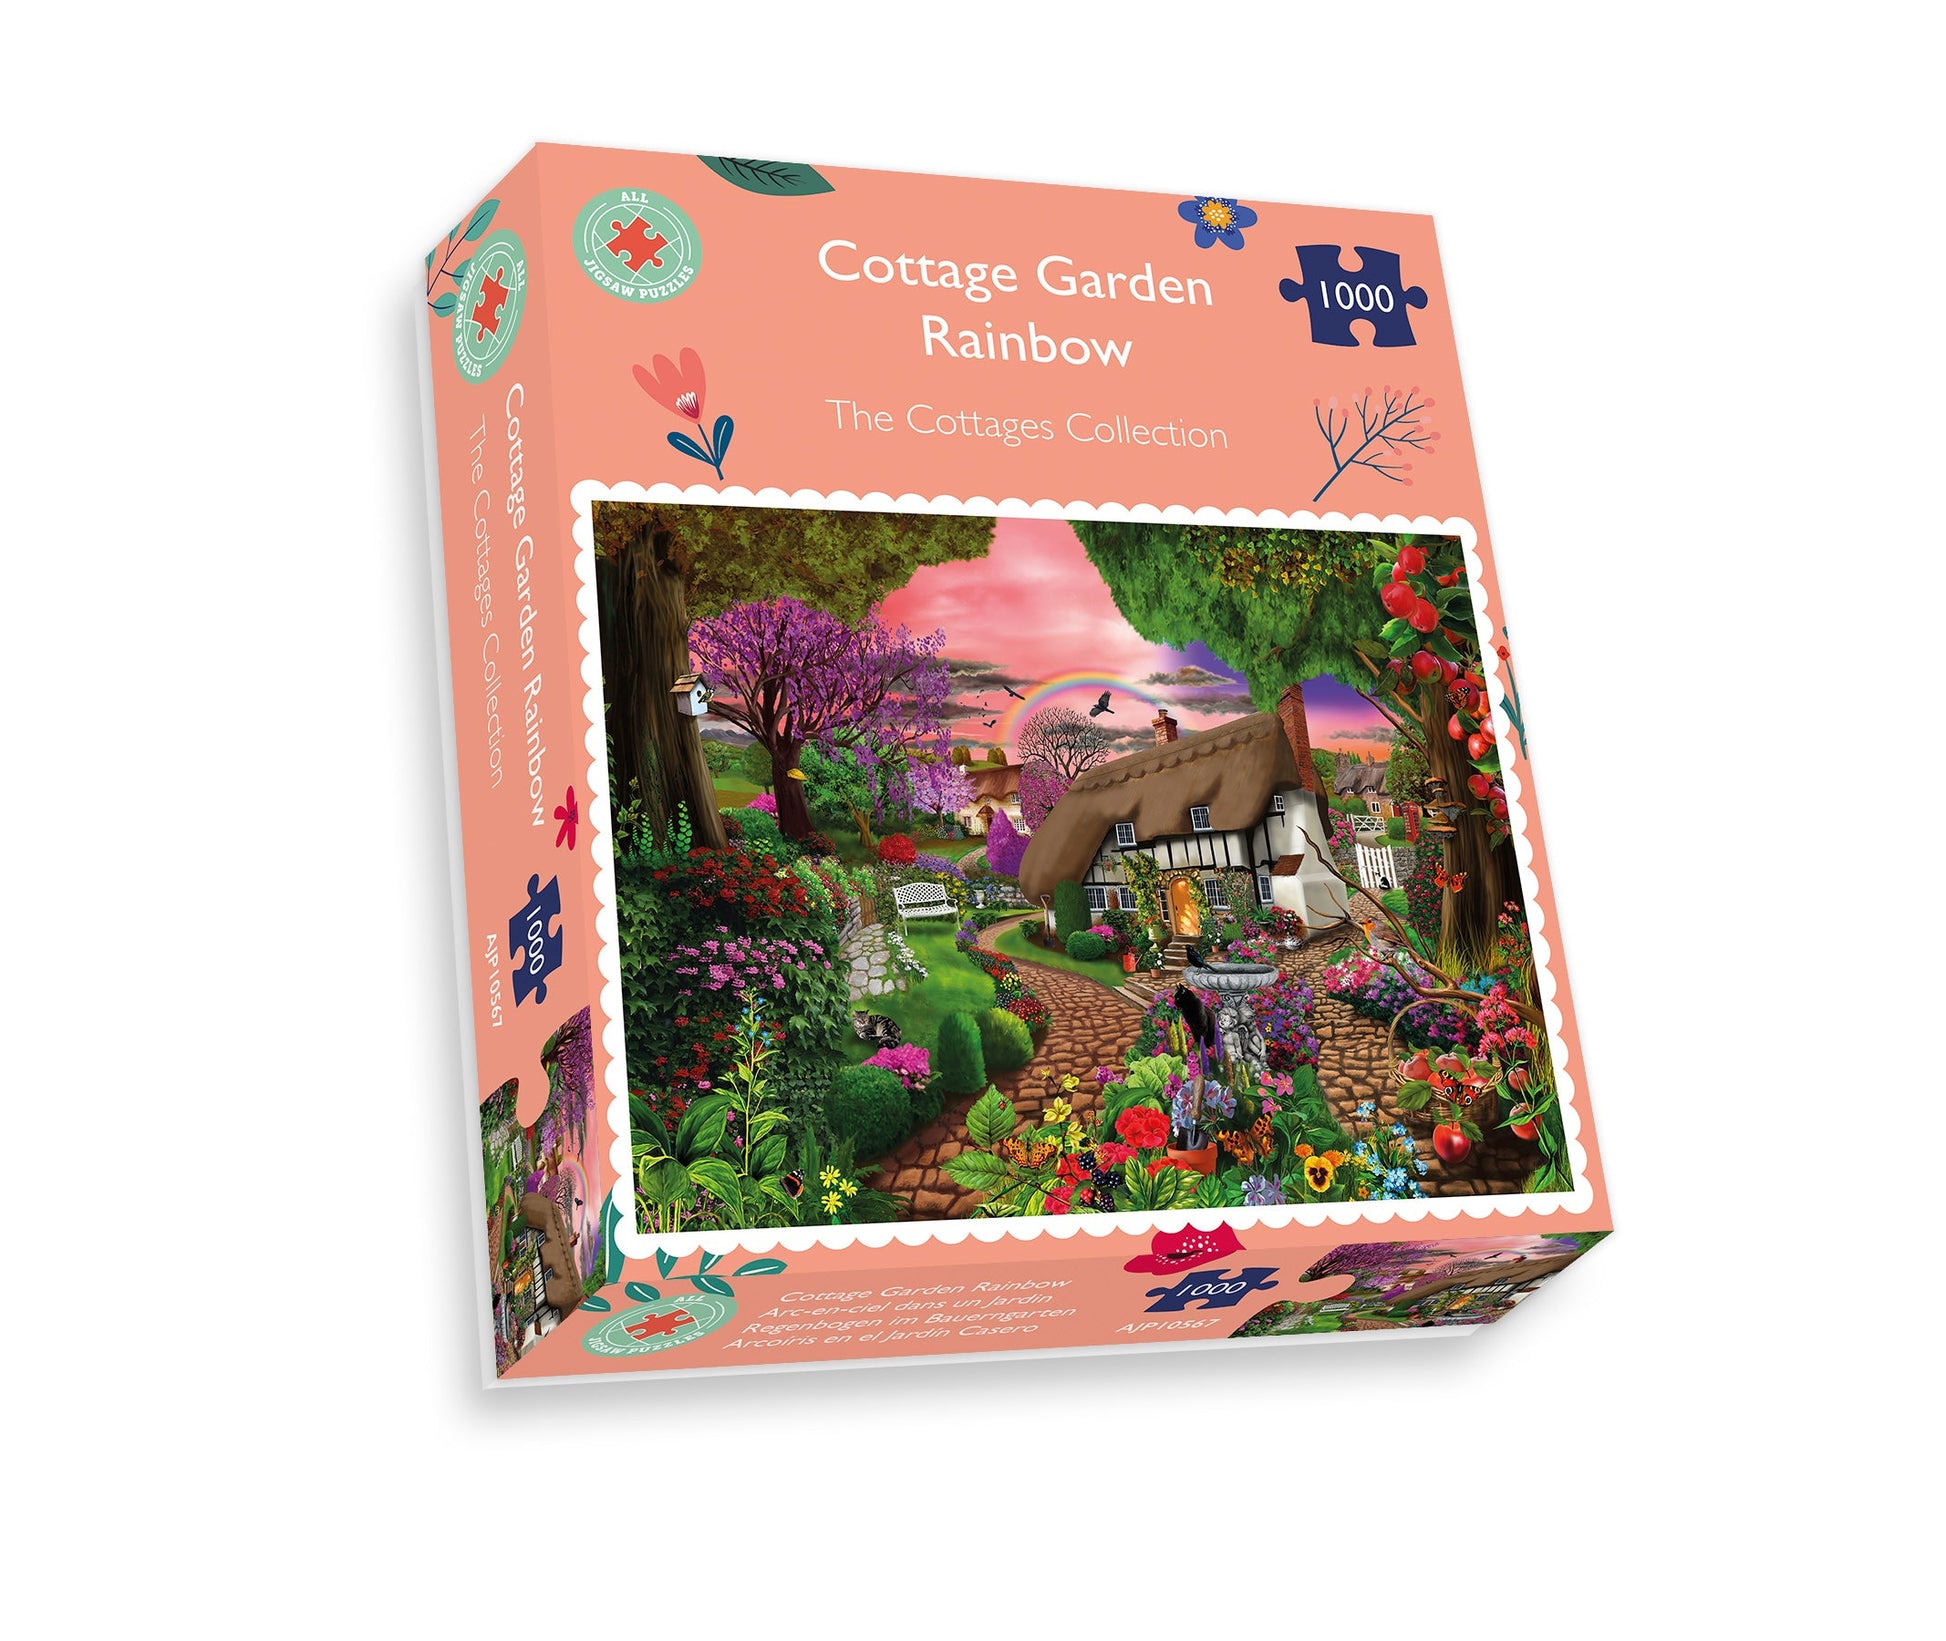 Cottage Garden Rainbow 1000 Pieces Jigsaw Puzzles